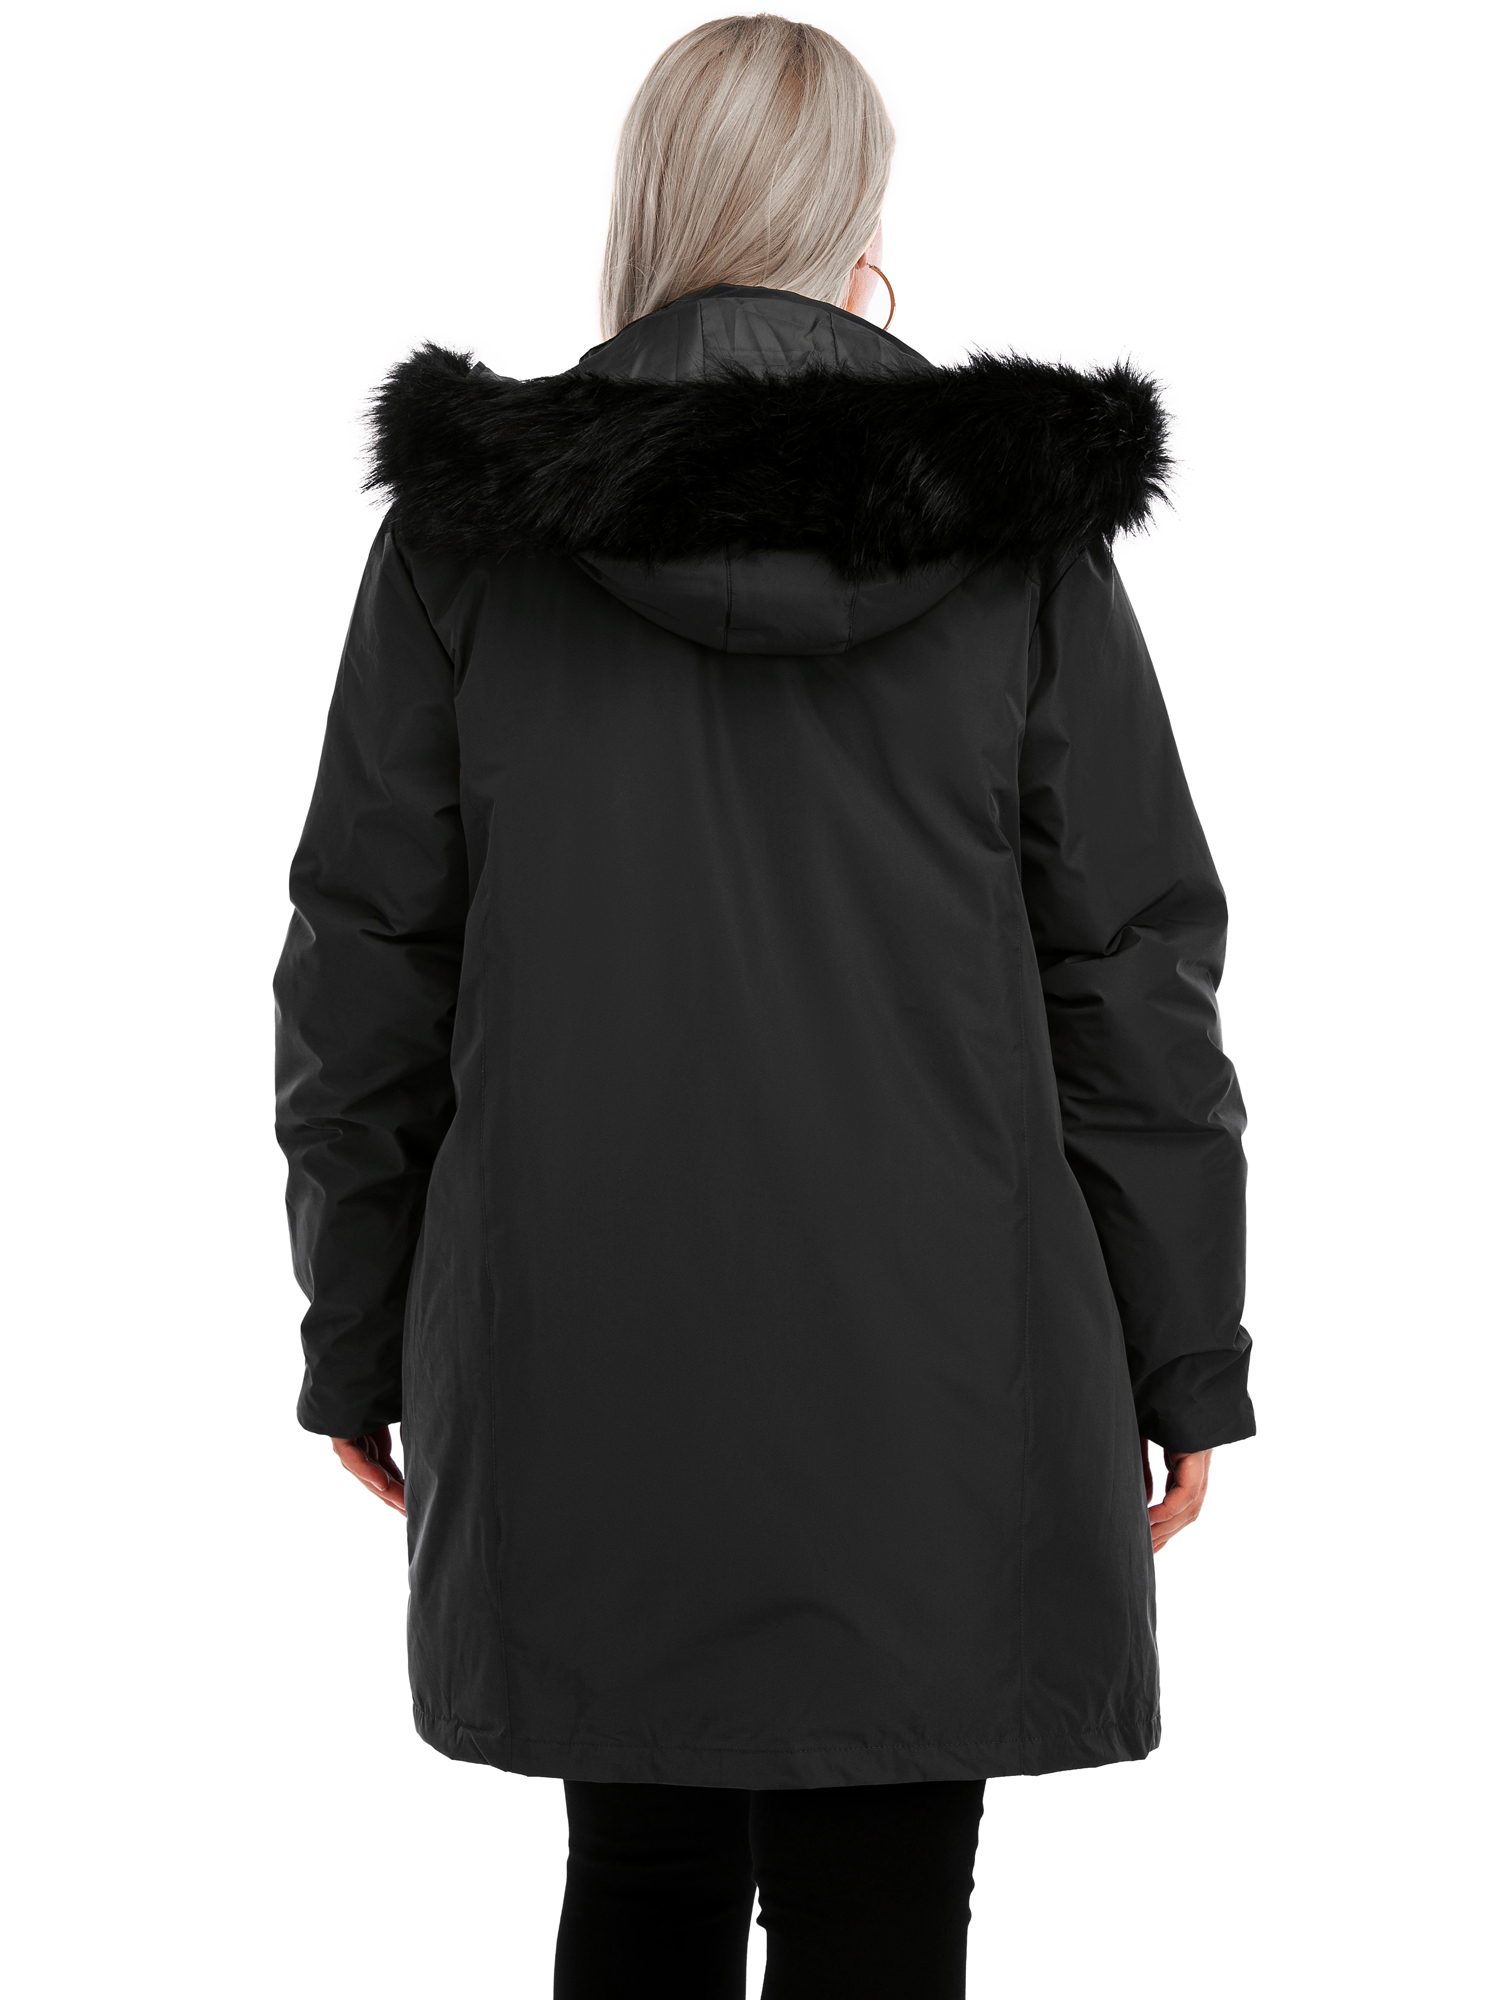 LELINTA Winter Plus Size Long Hoodie Coat Warm Jacket for Women, Zipper Parka Overcoats Raincoat Active Outdoor Trench Coat - image 5 of 7